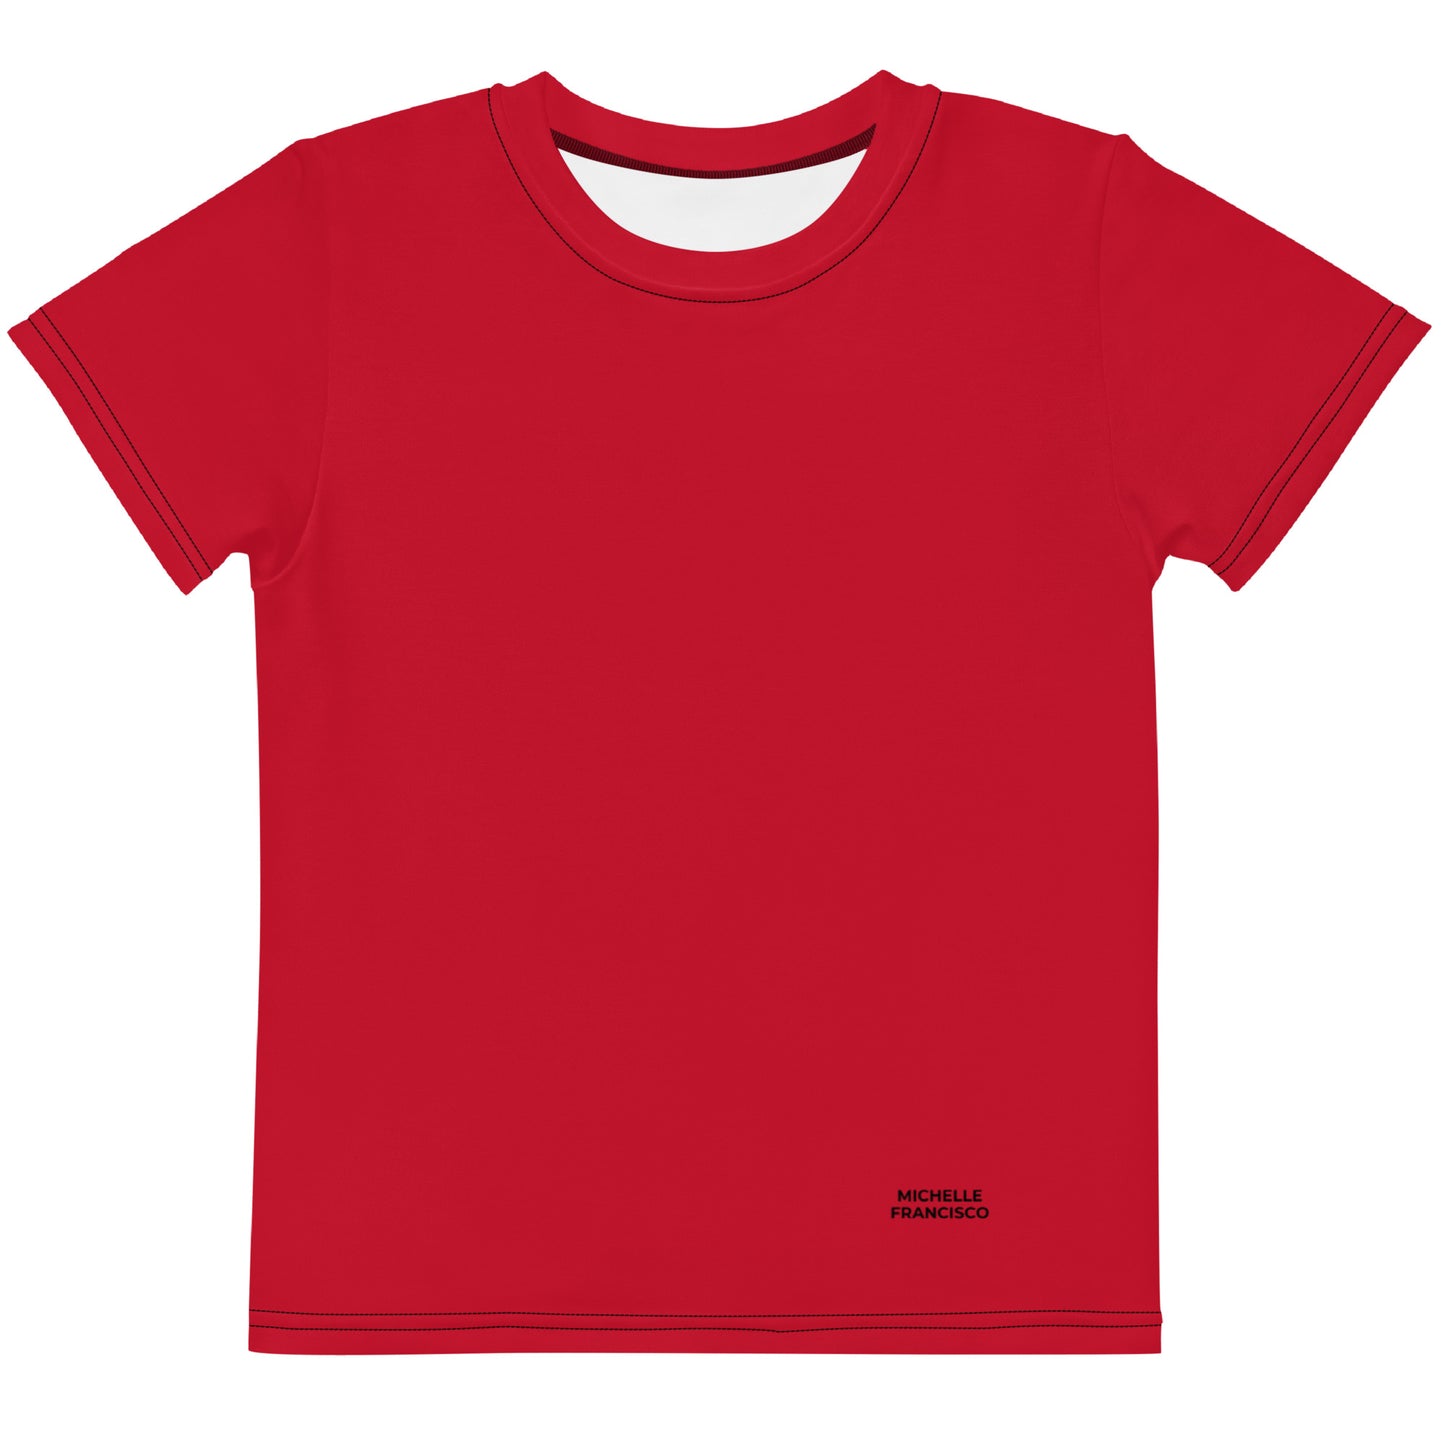 Red Kids Crew Neck T-shirt